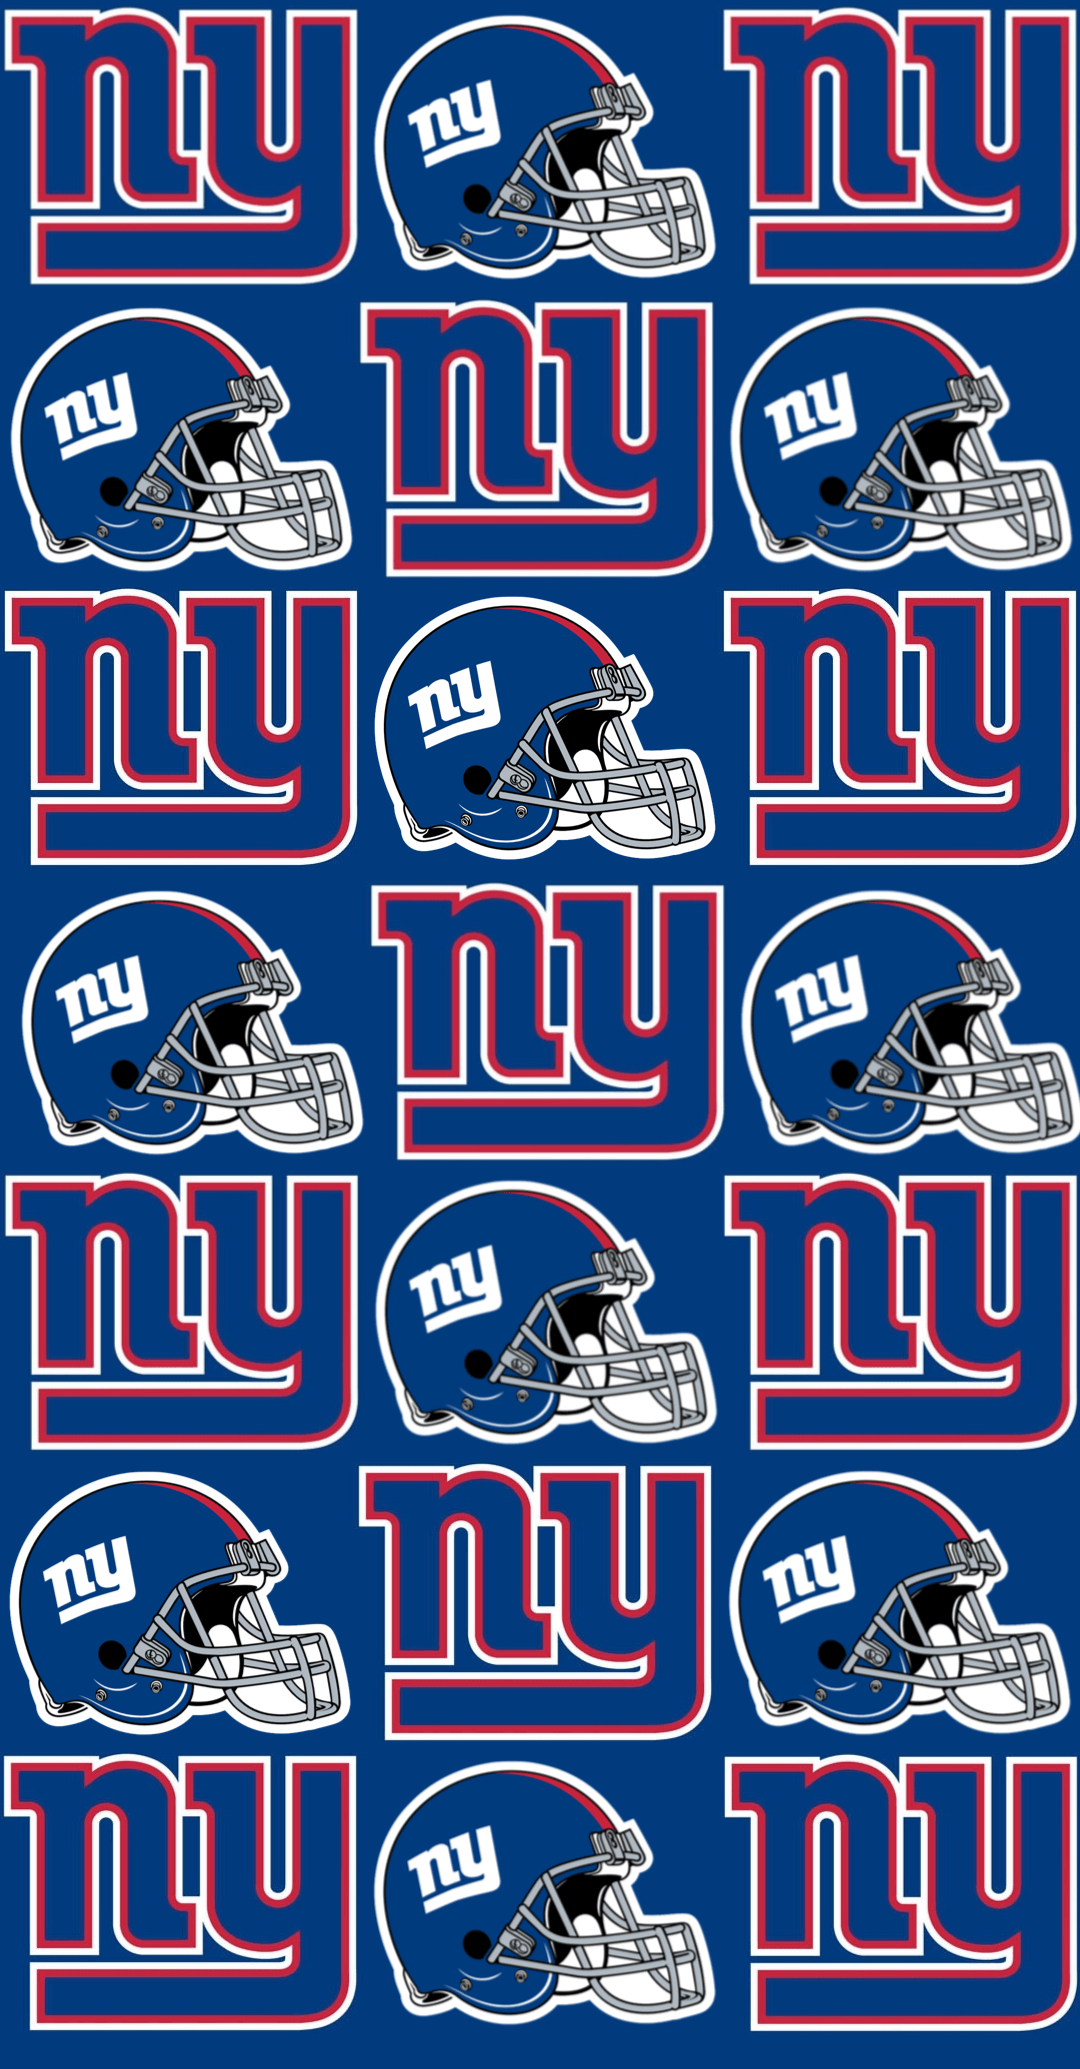 My Ny Giants iPhone wallpaper. New york giants football, Ny giants, Giants football